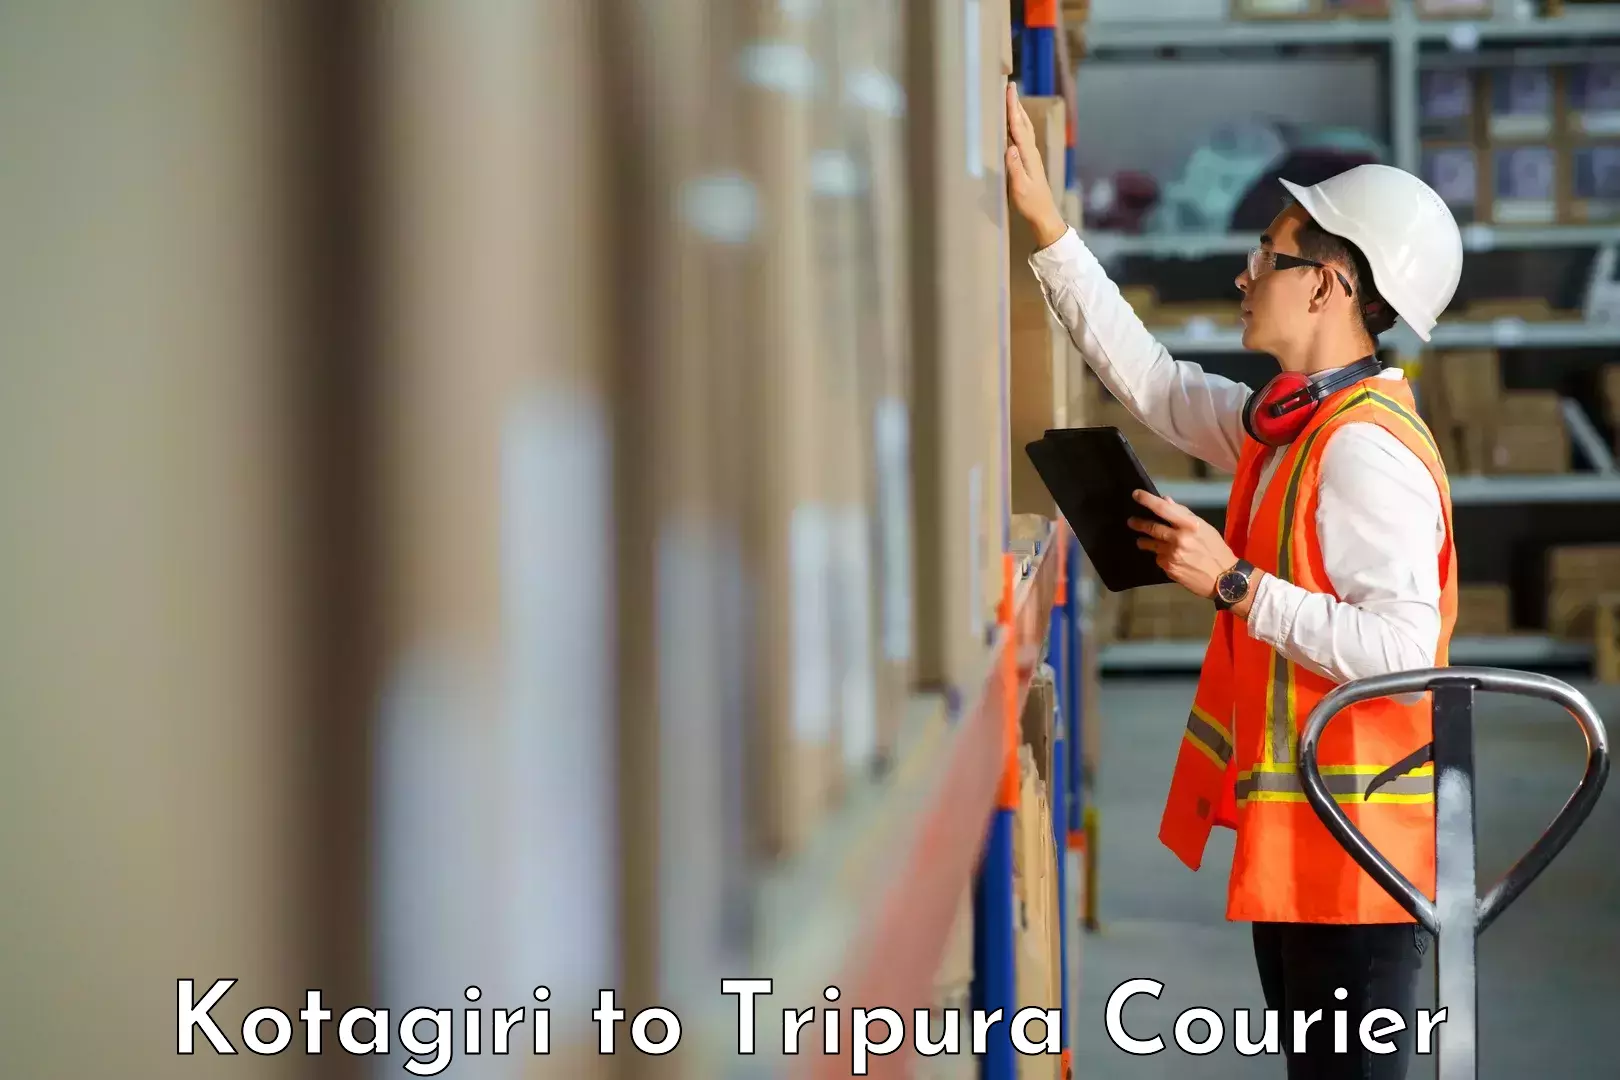 Courier services in Kotagiri to Tripura